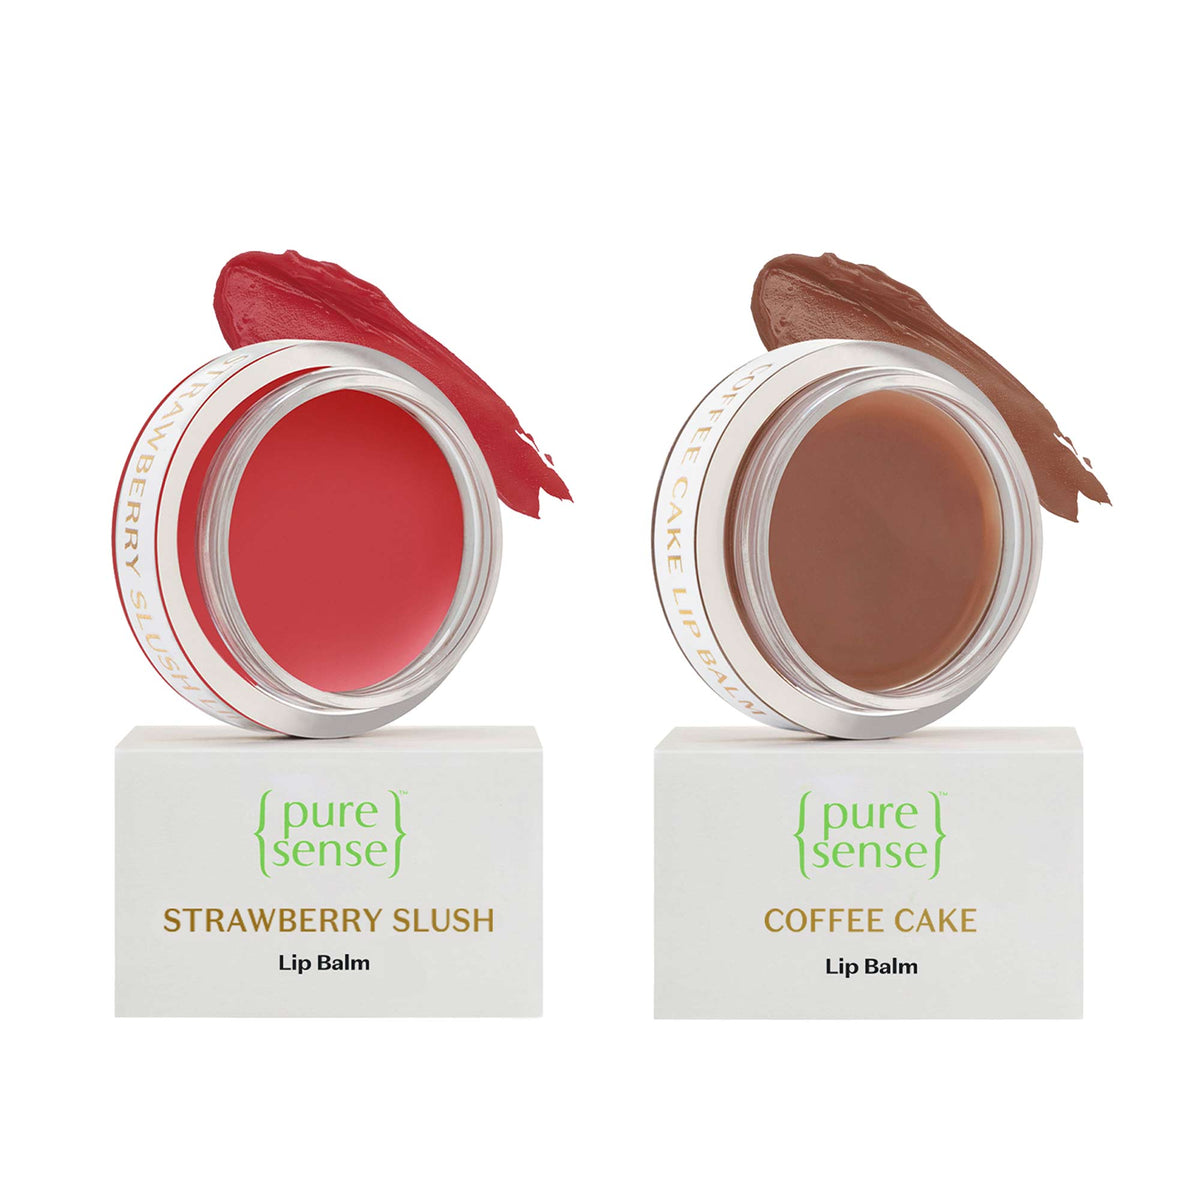 Strawberry Slush Lip Balm 5ml + Coffee Cake Lip Balm 5ml | From the makers of Parachute Advansed | 10ml